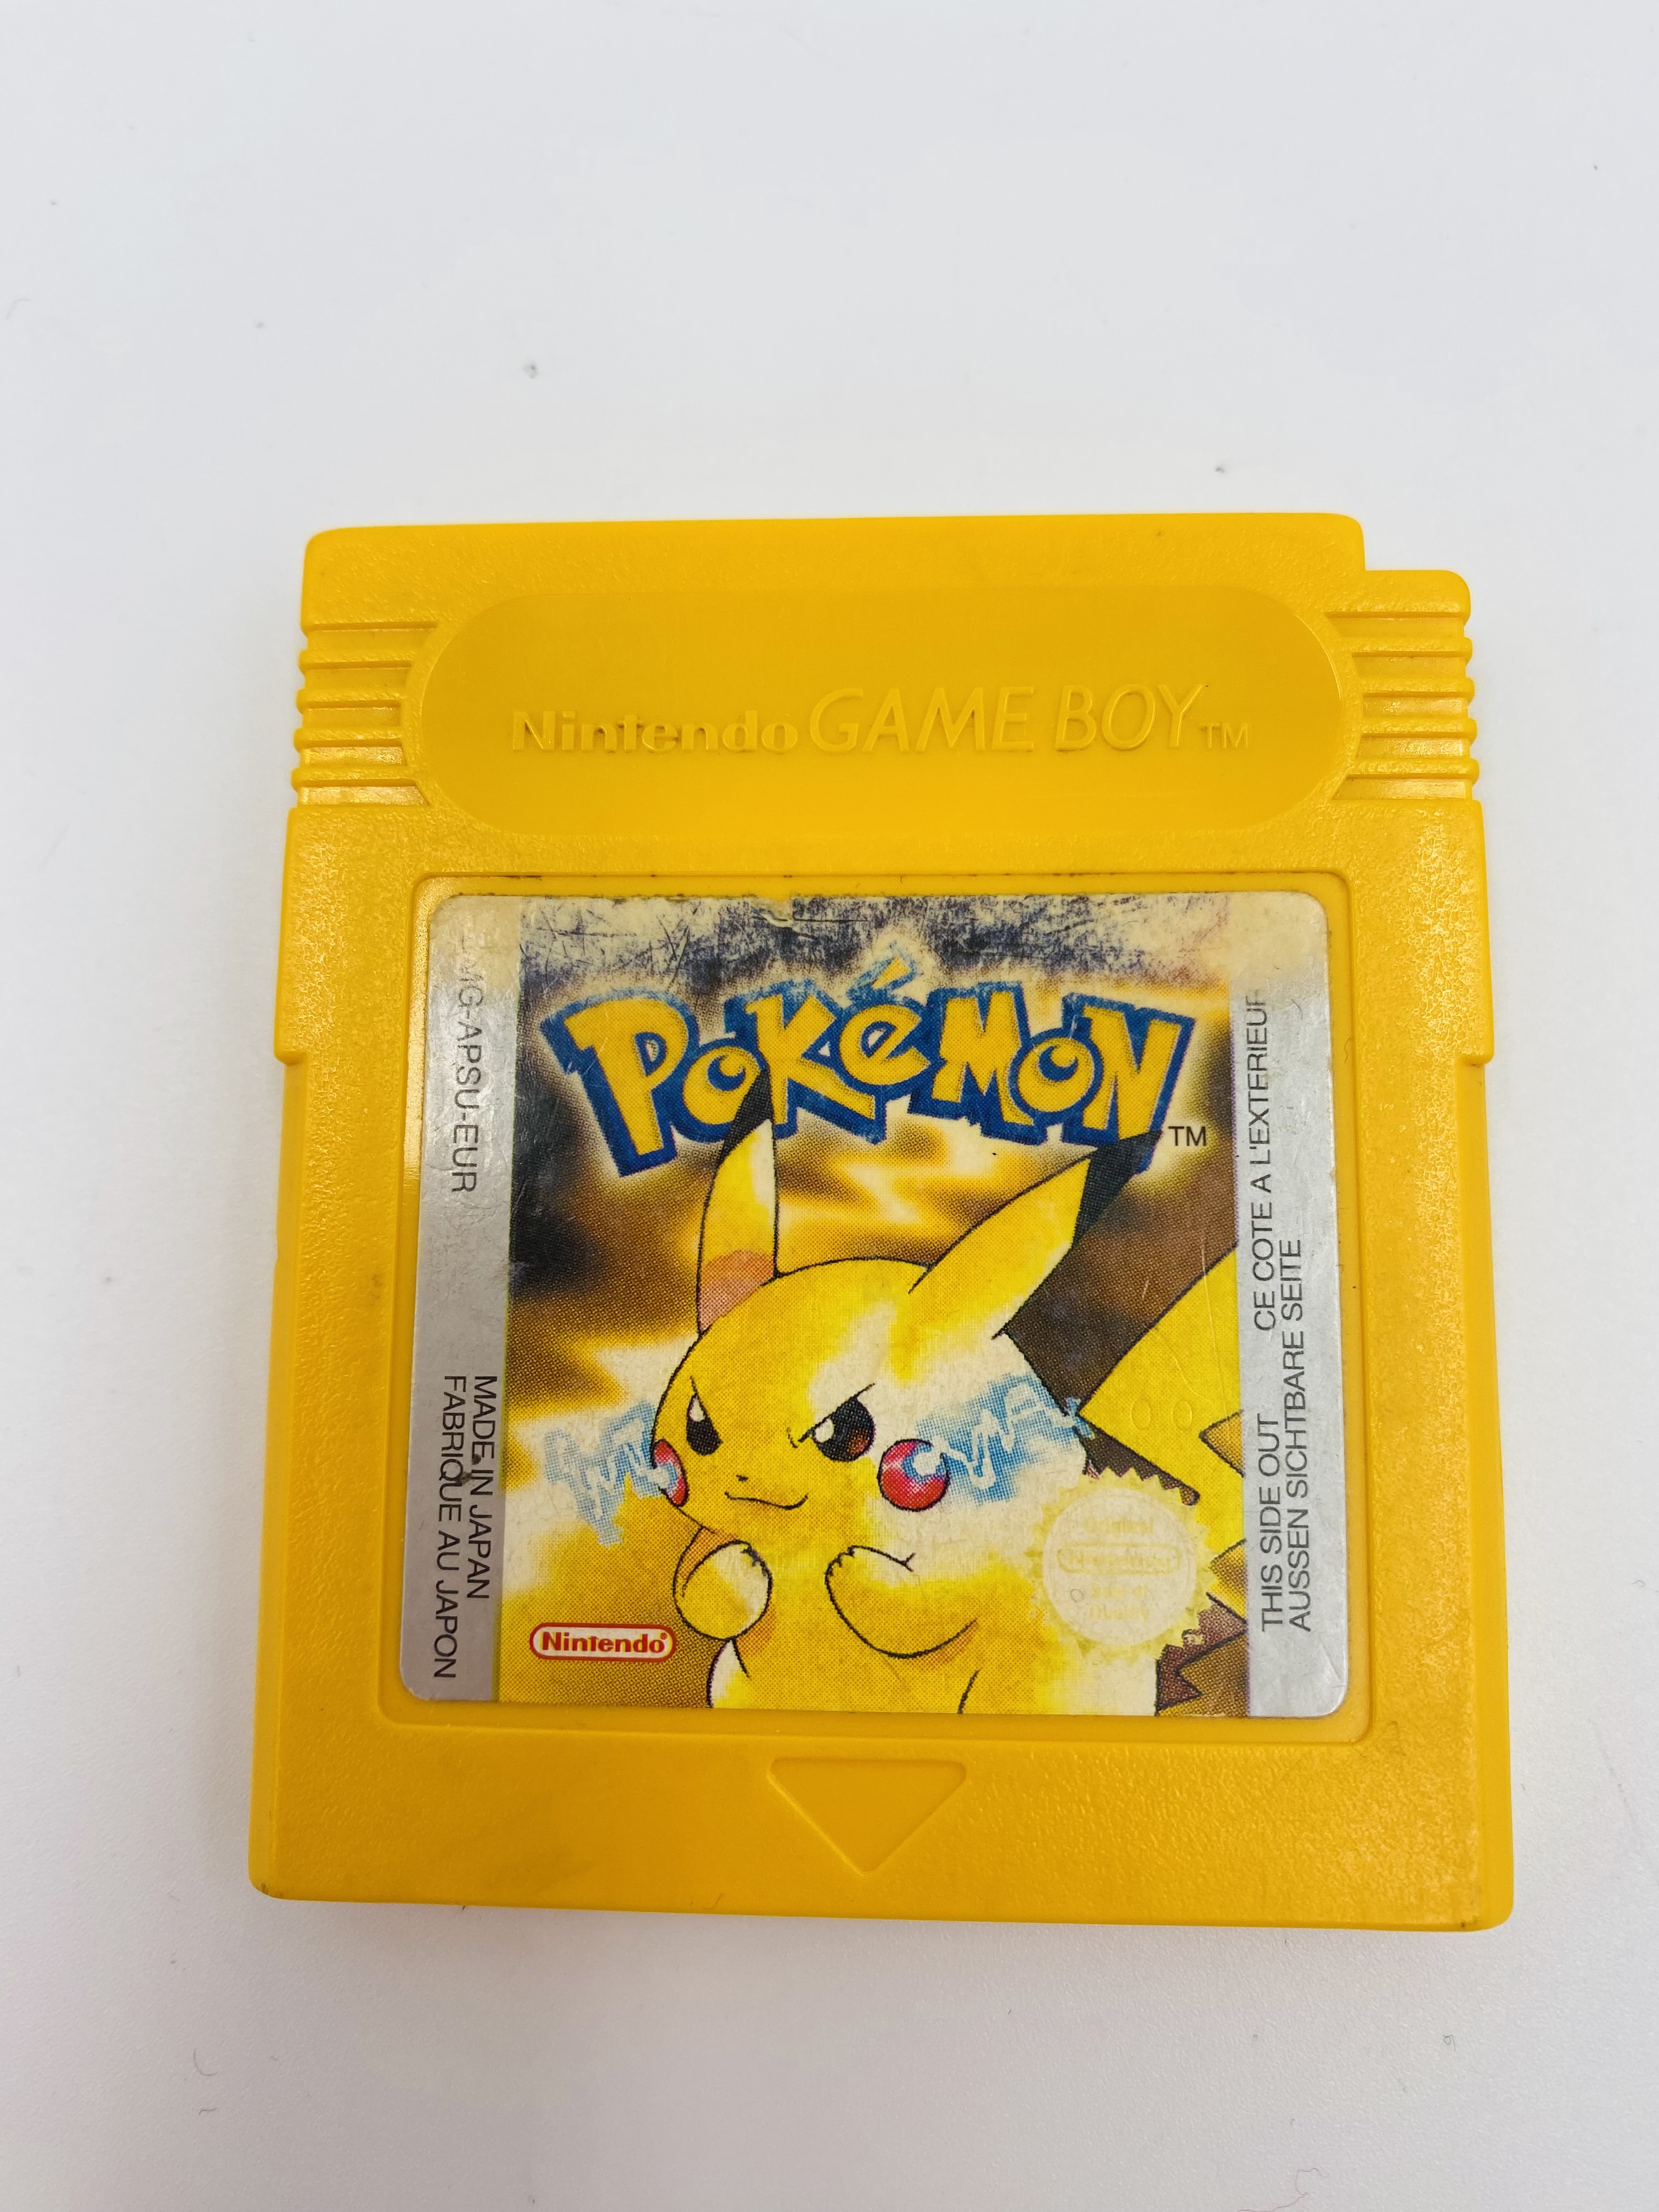 Nintendo Gameboy Pokemon - Image 2 of 2